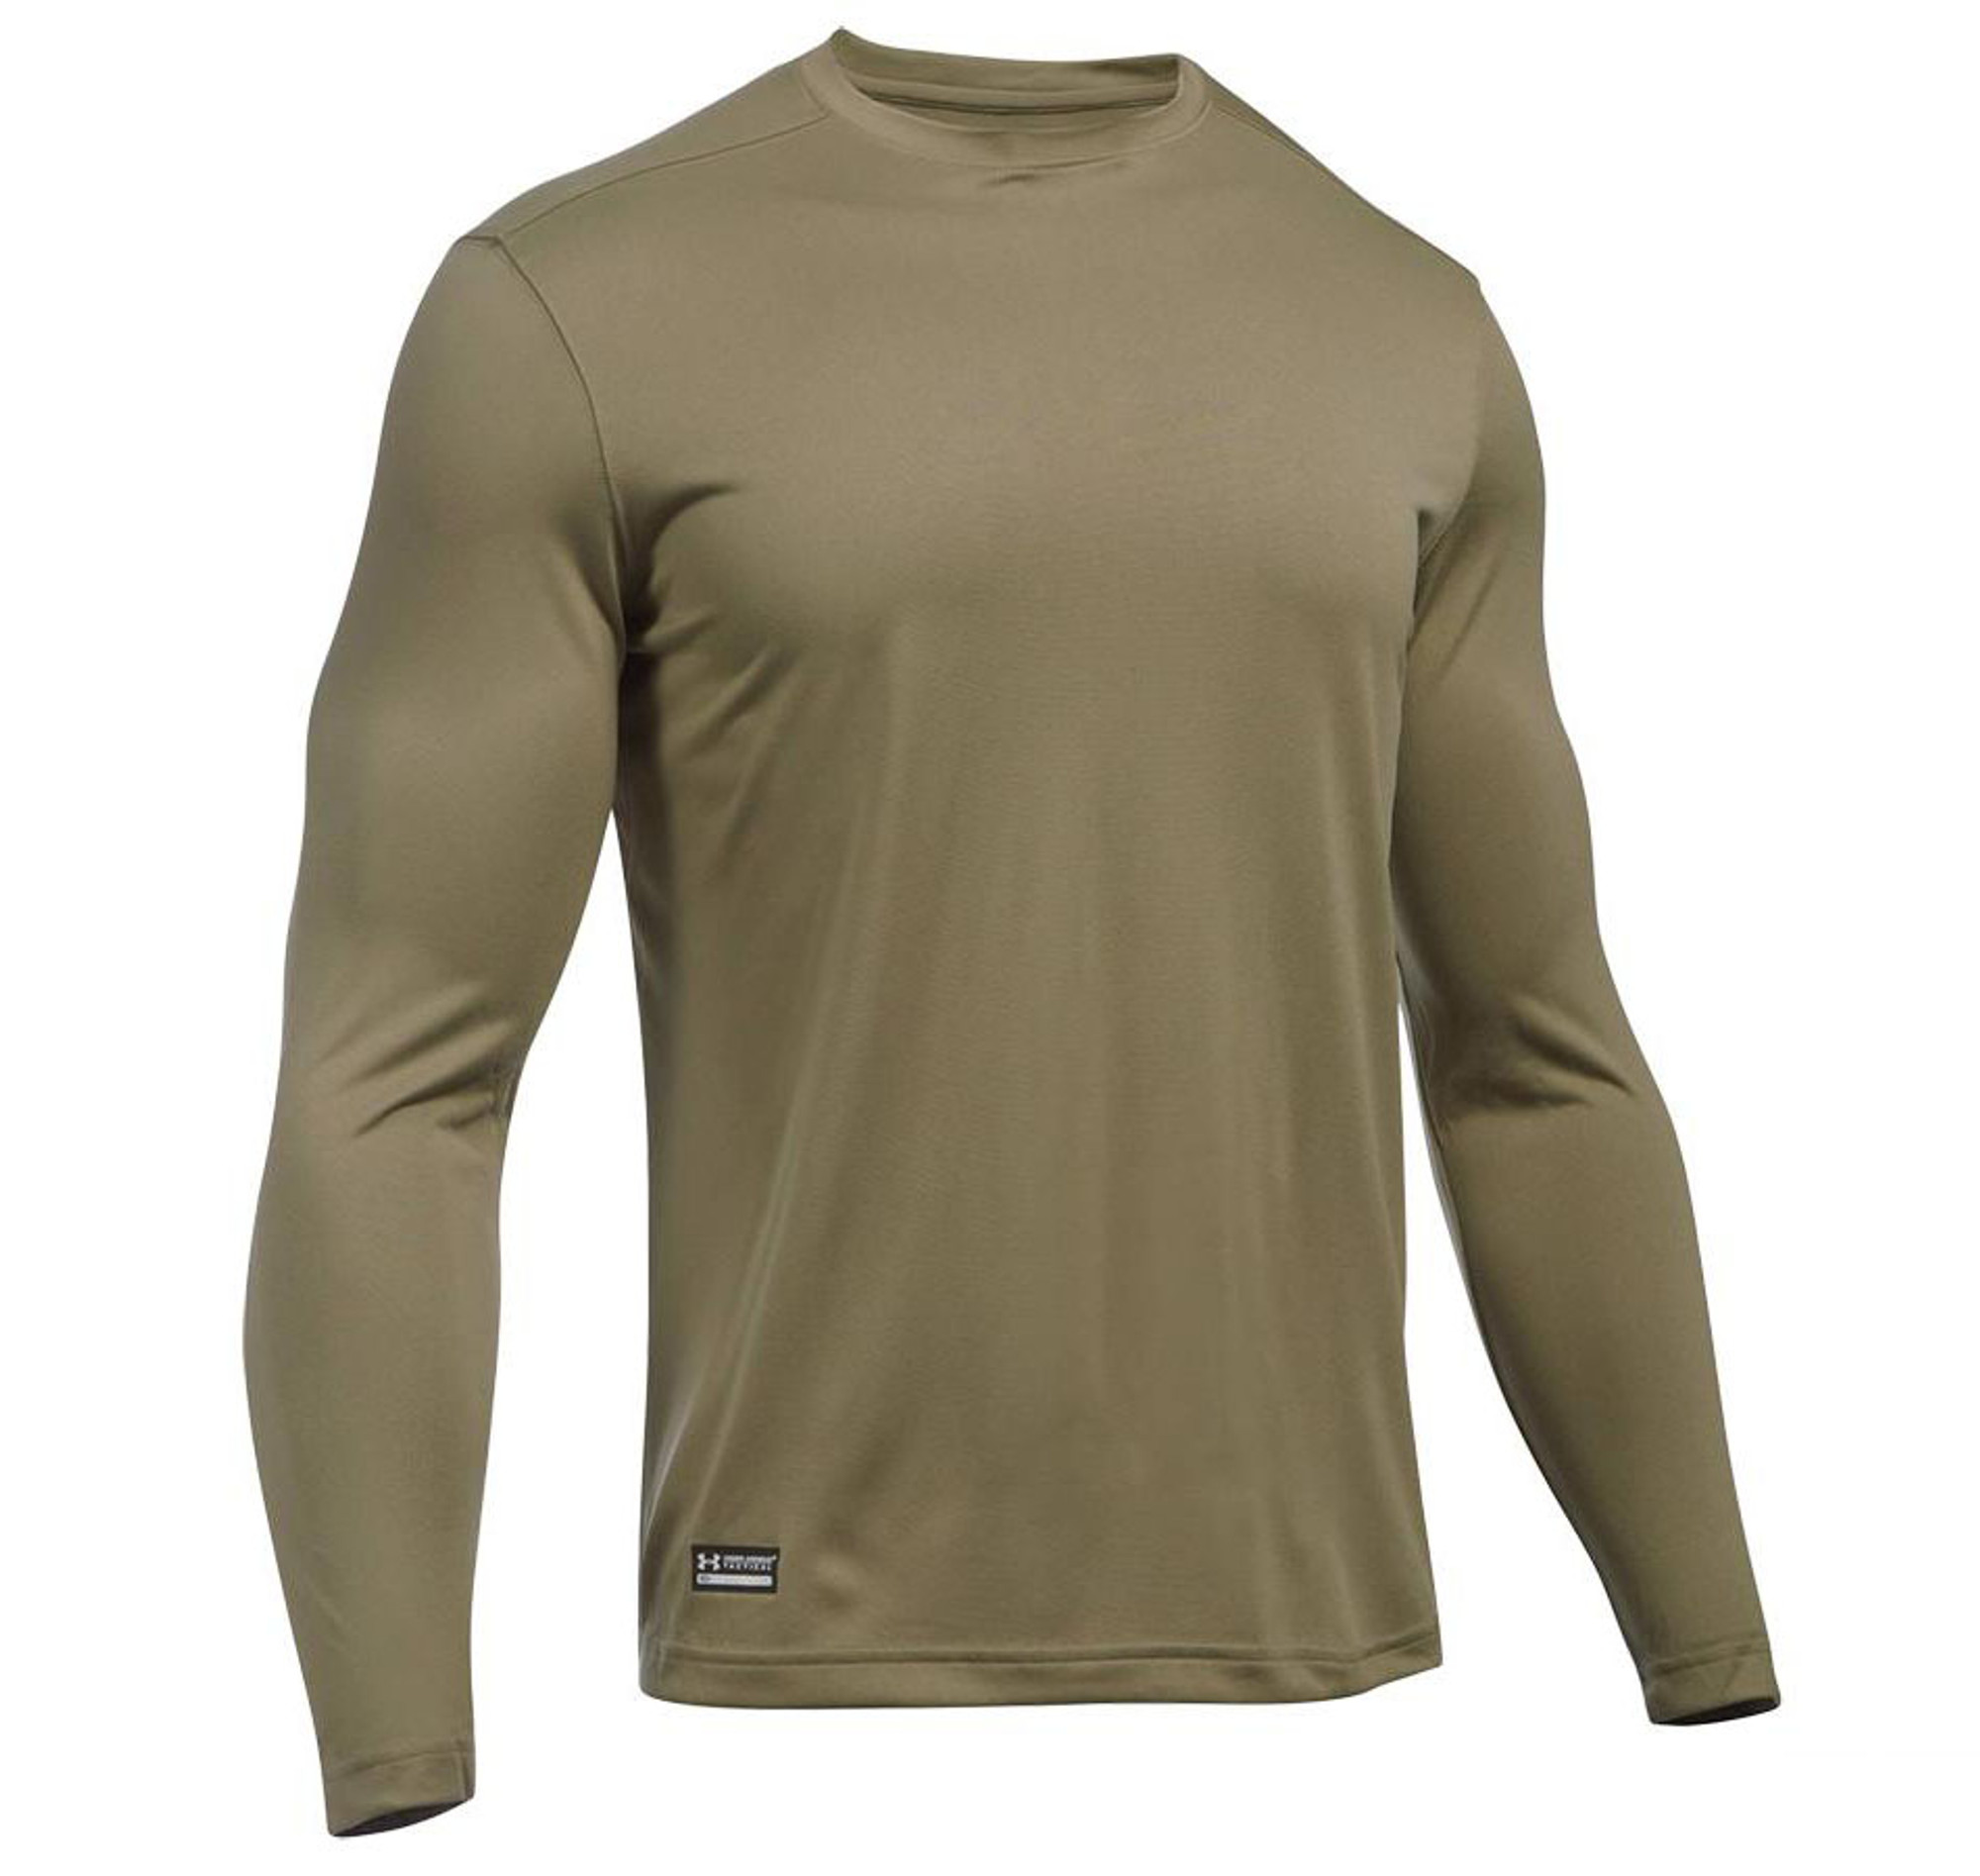 Under Armour Men's Tactical UA Tech Long Sleeve T-Shirt (Color: Federal Tan)